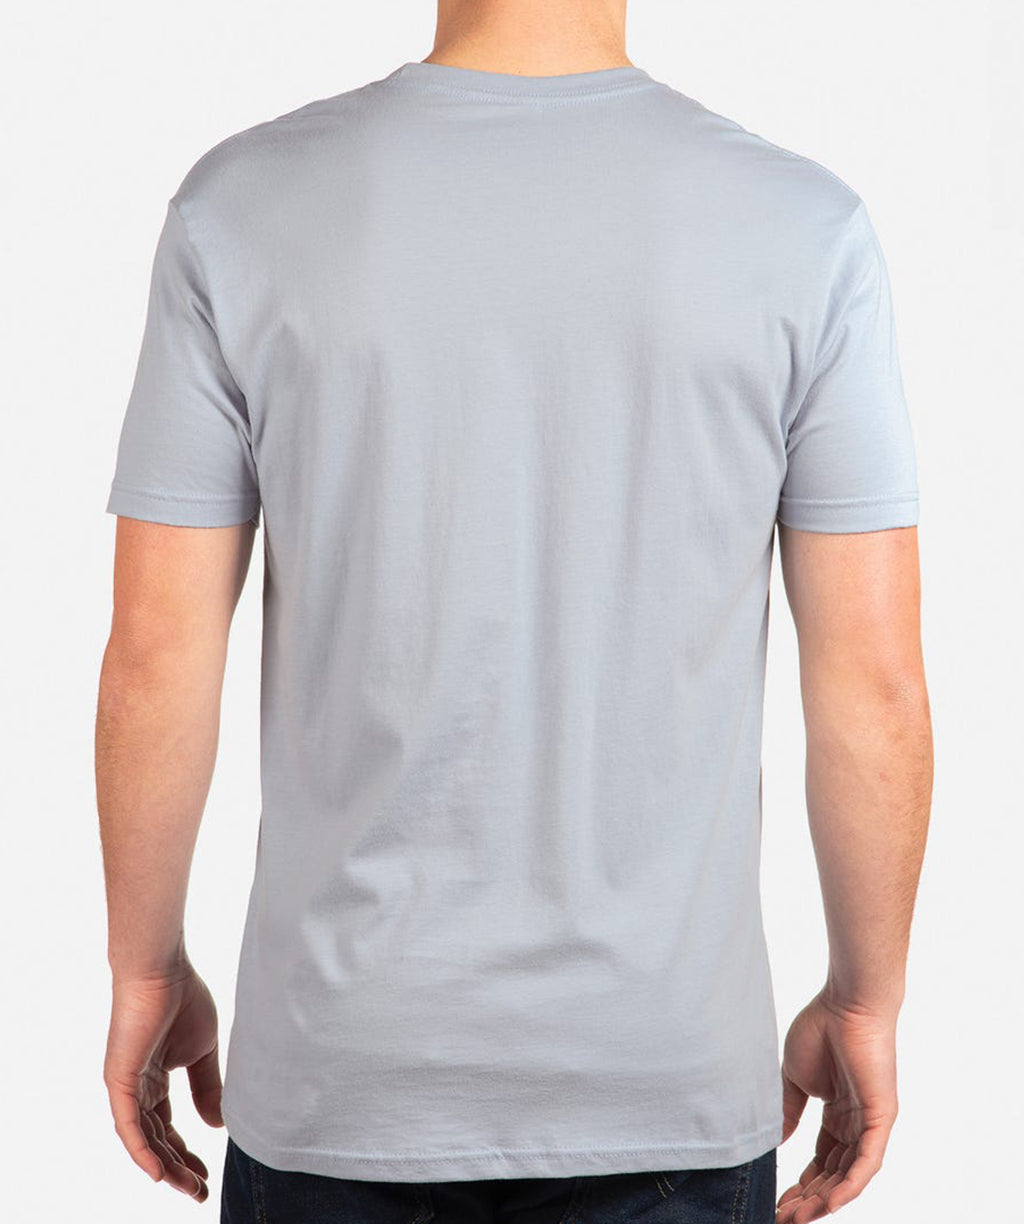 Next Level 3600 Premium Soft Tshirt (40-59 Shirts)